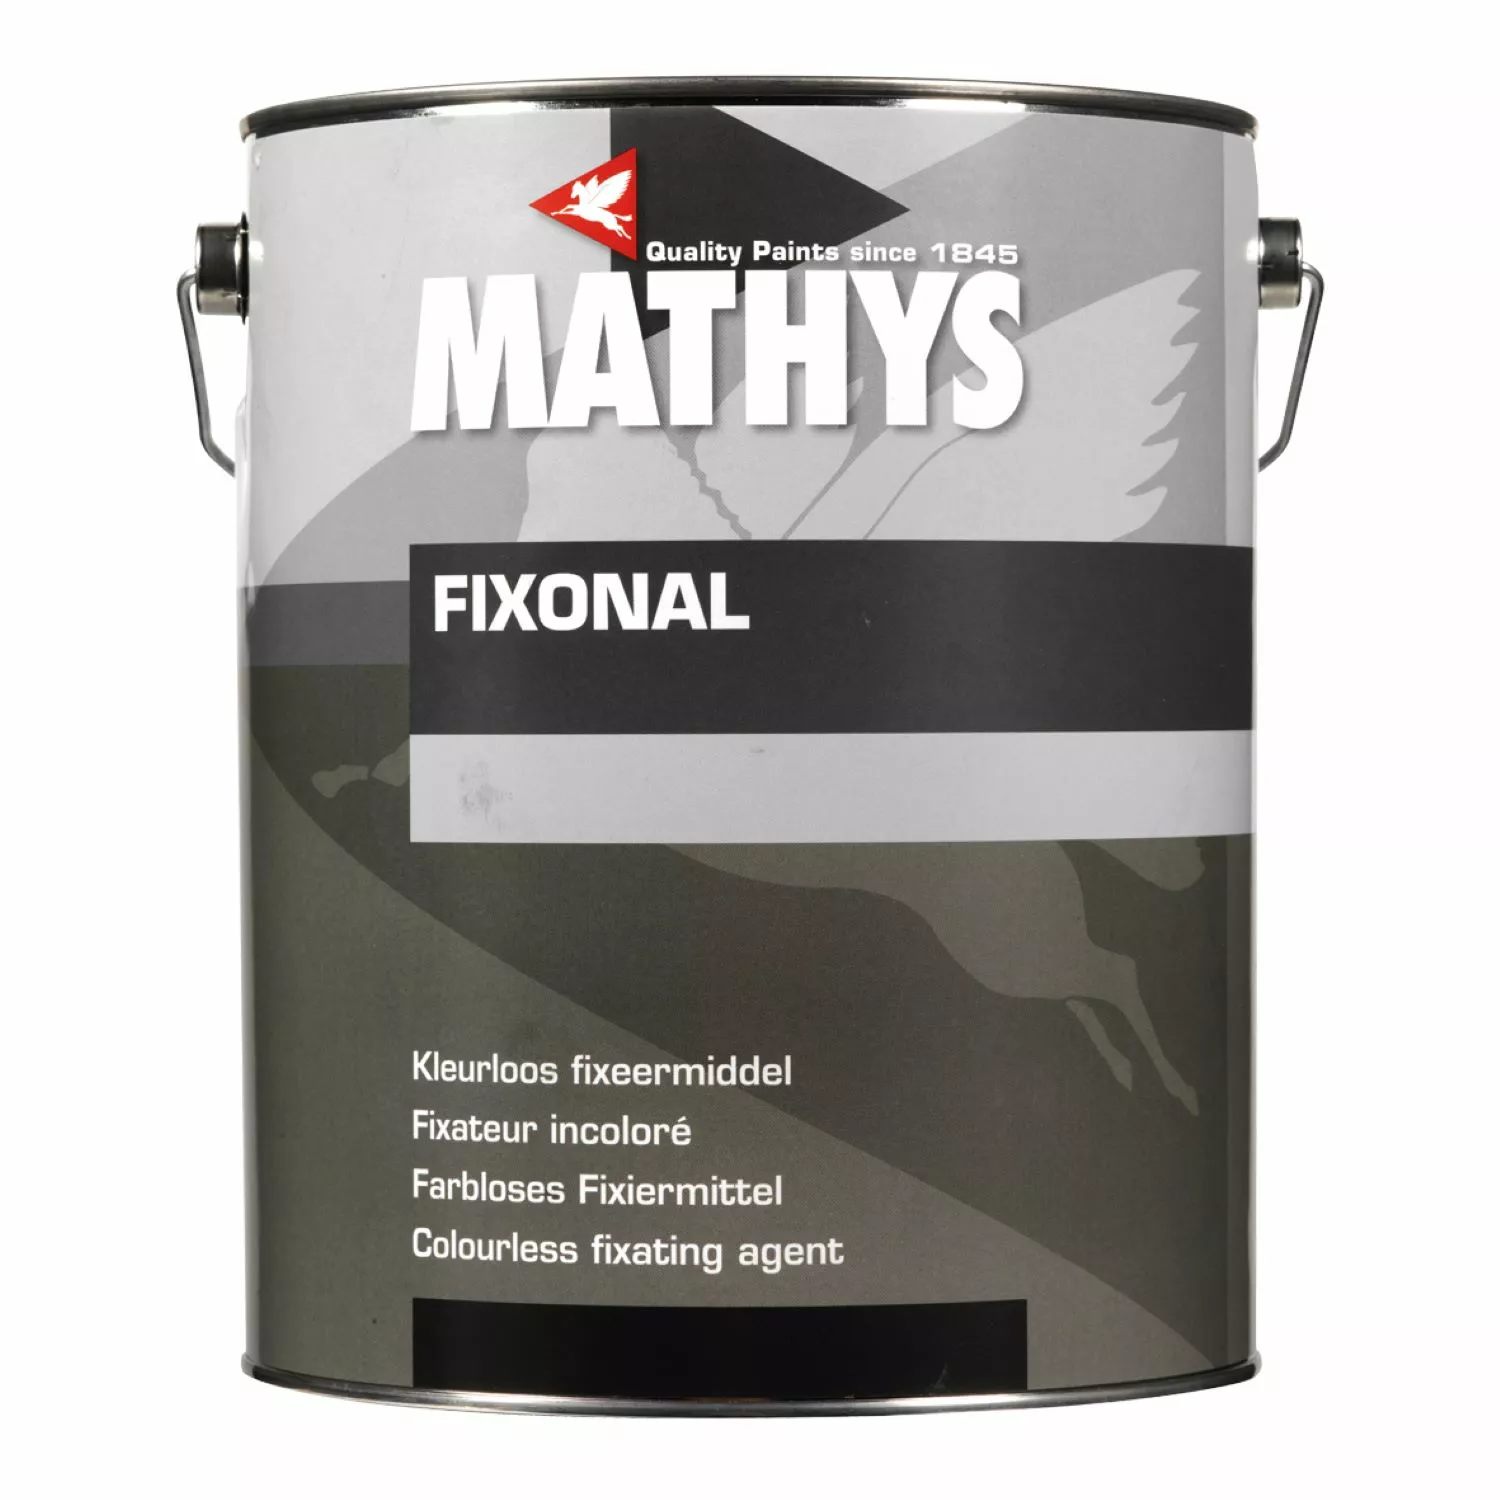 Mathys Fixonal 1 L-image